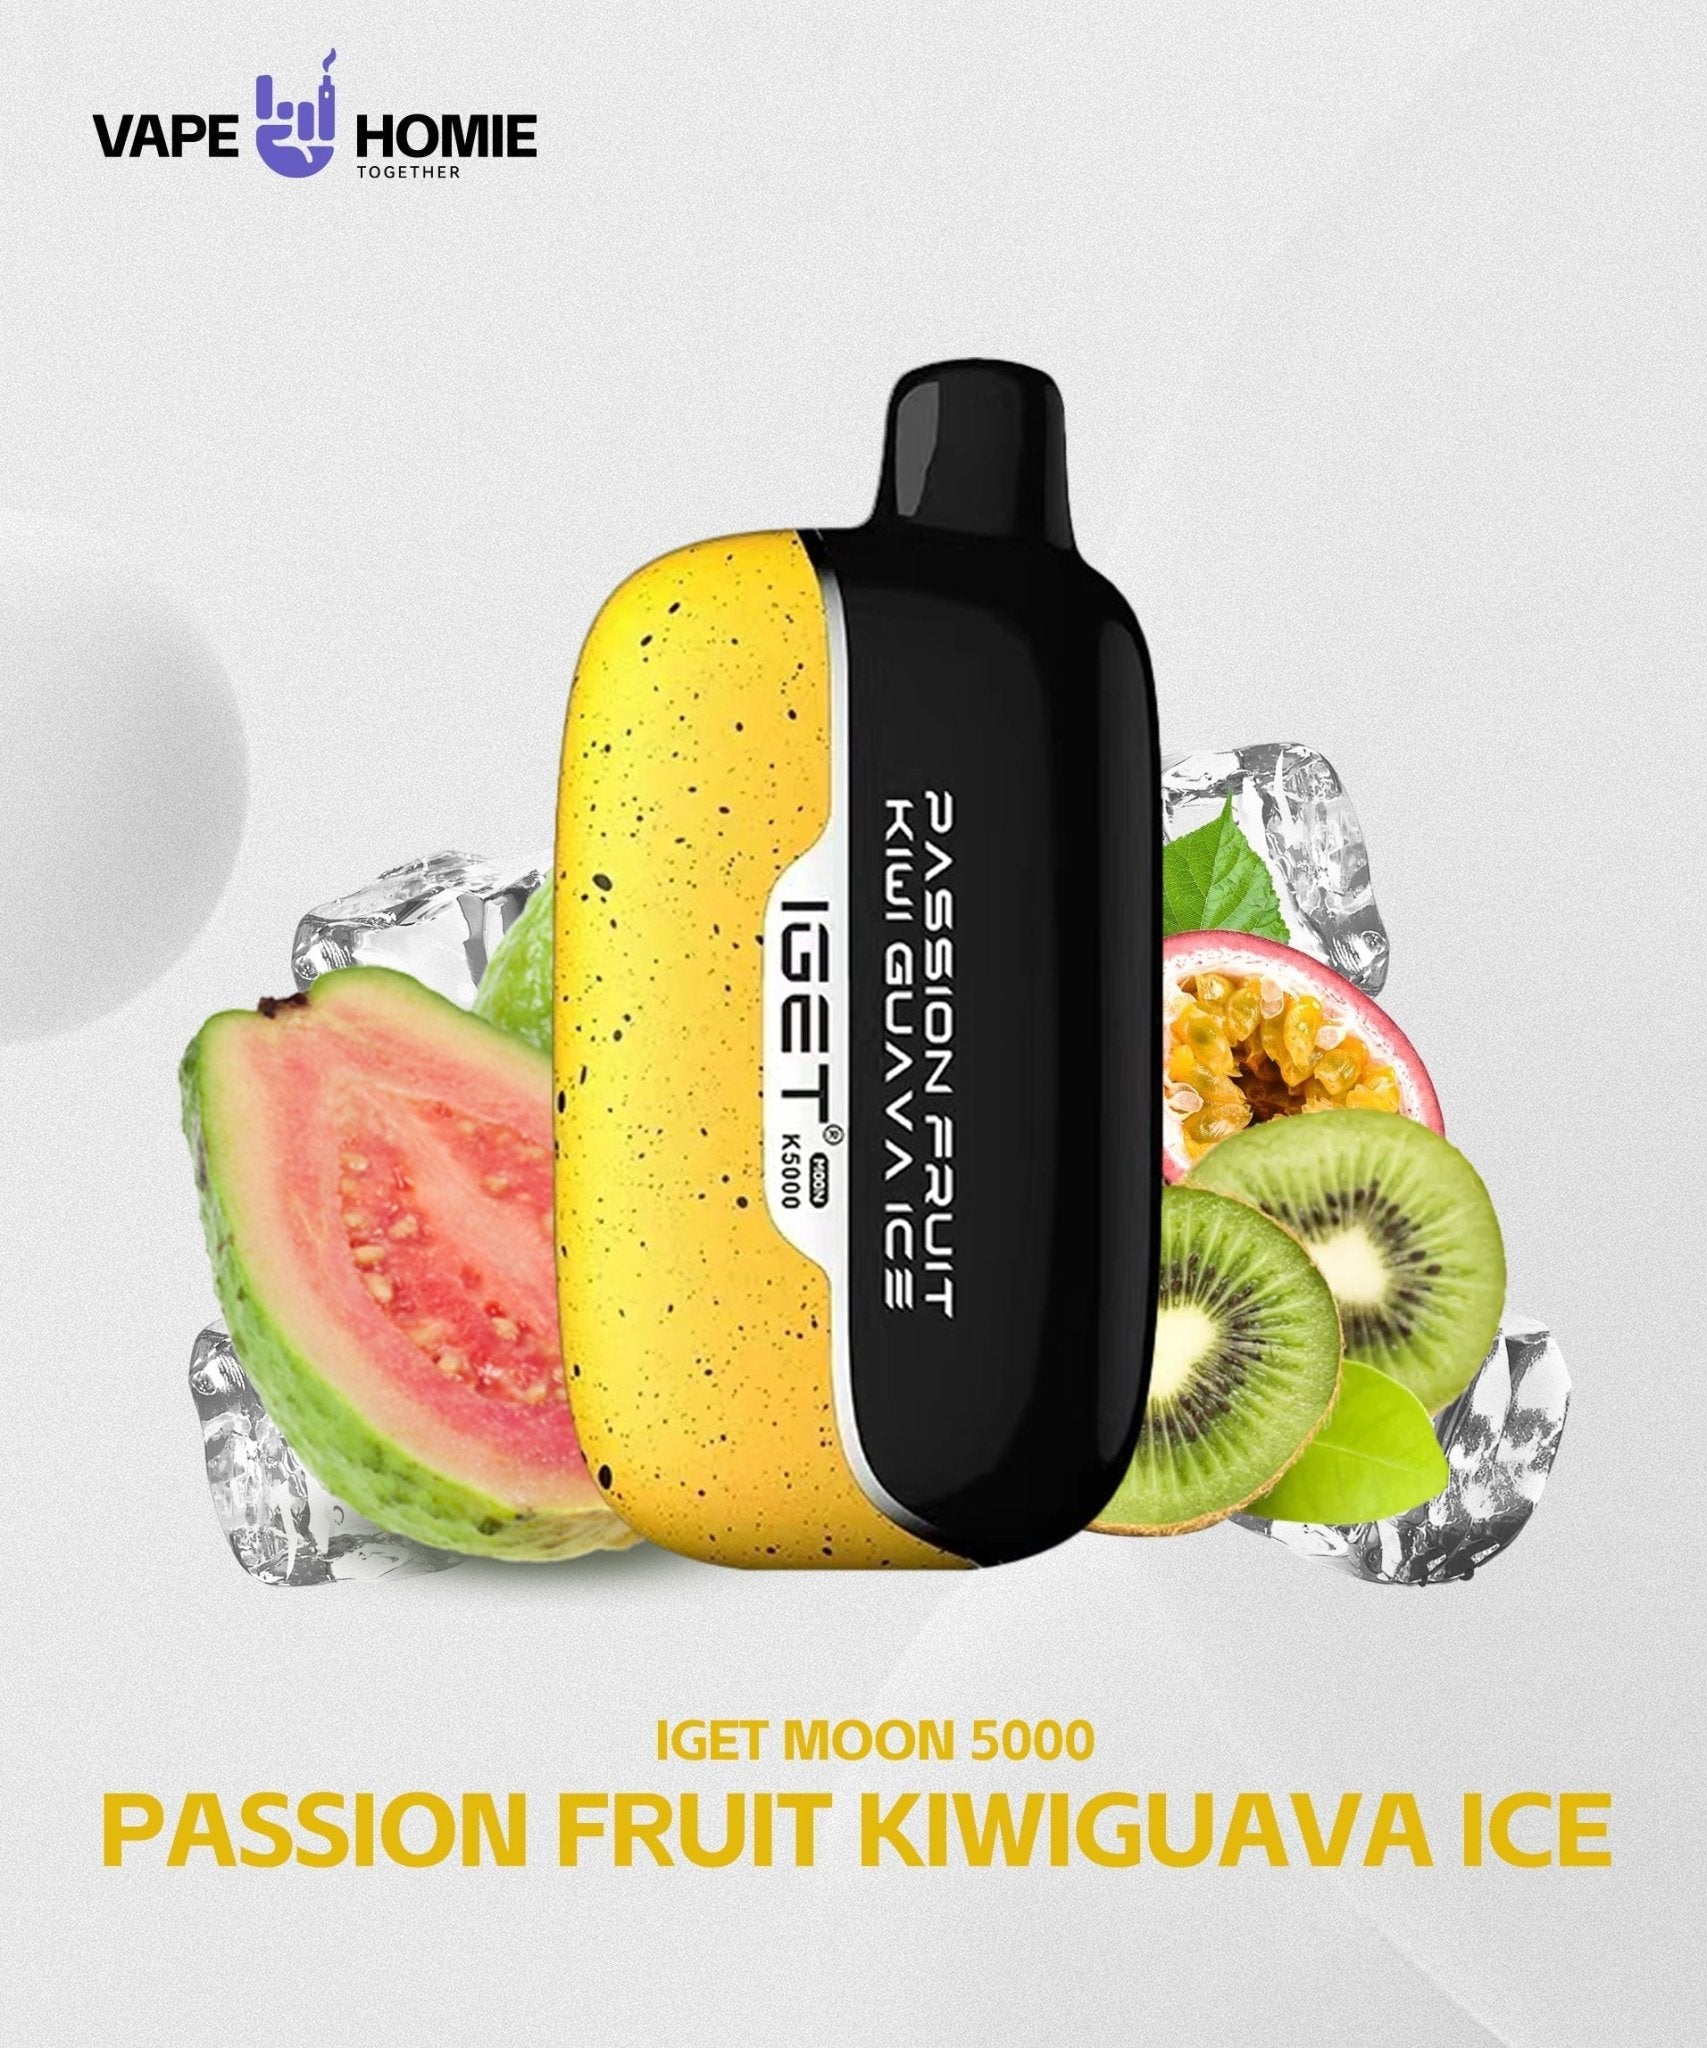 IGET MOON K5000 - PASSION FRUIT KIWI GUAVA ICE - HAPPYTRAIL